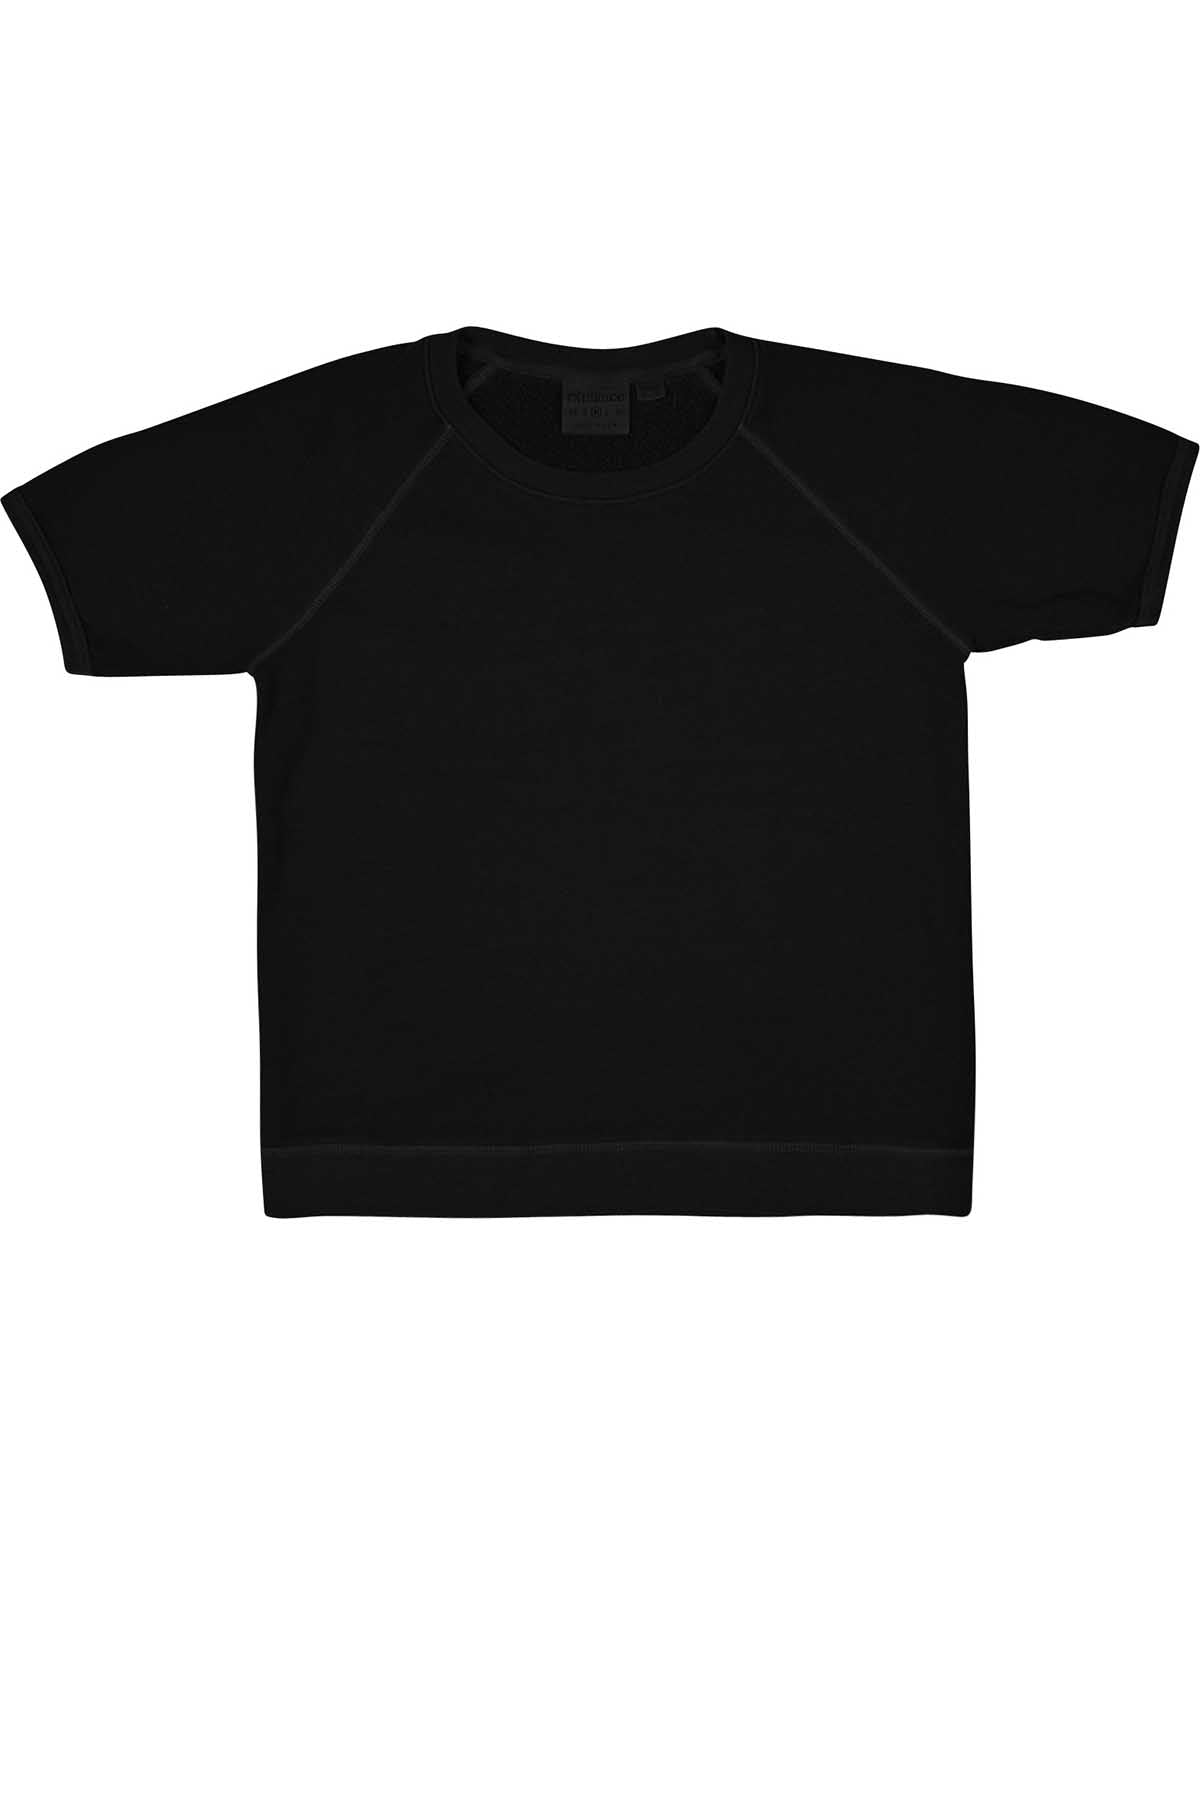 Rxmance Unisex Phantom Black Short Sleeve Sweatshirt